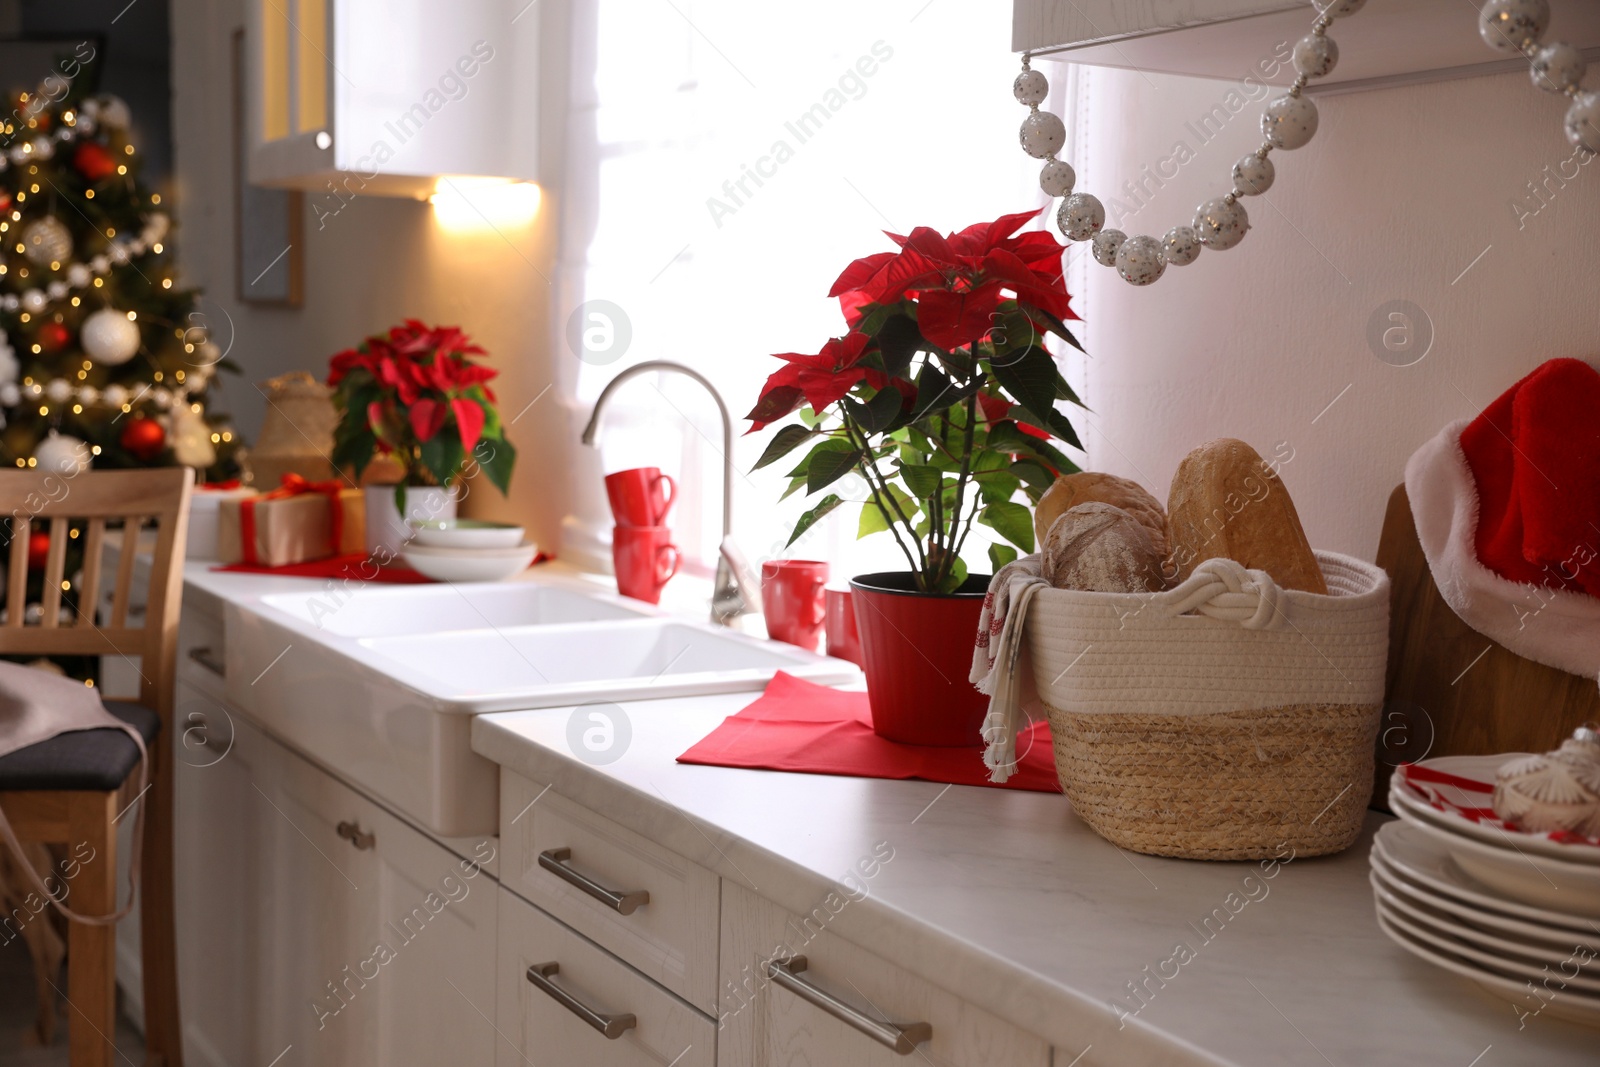 Photo of Beautiful kitchen interior with stylish Christmas decor